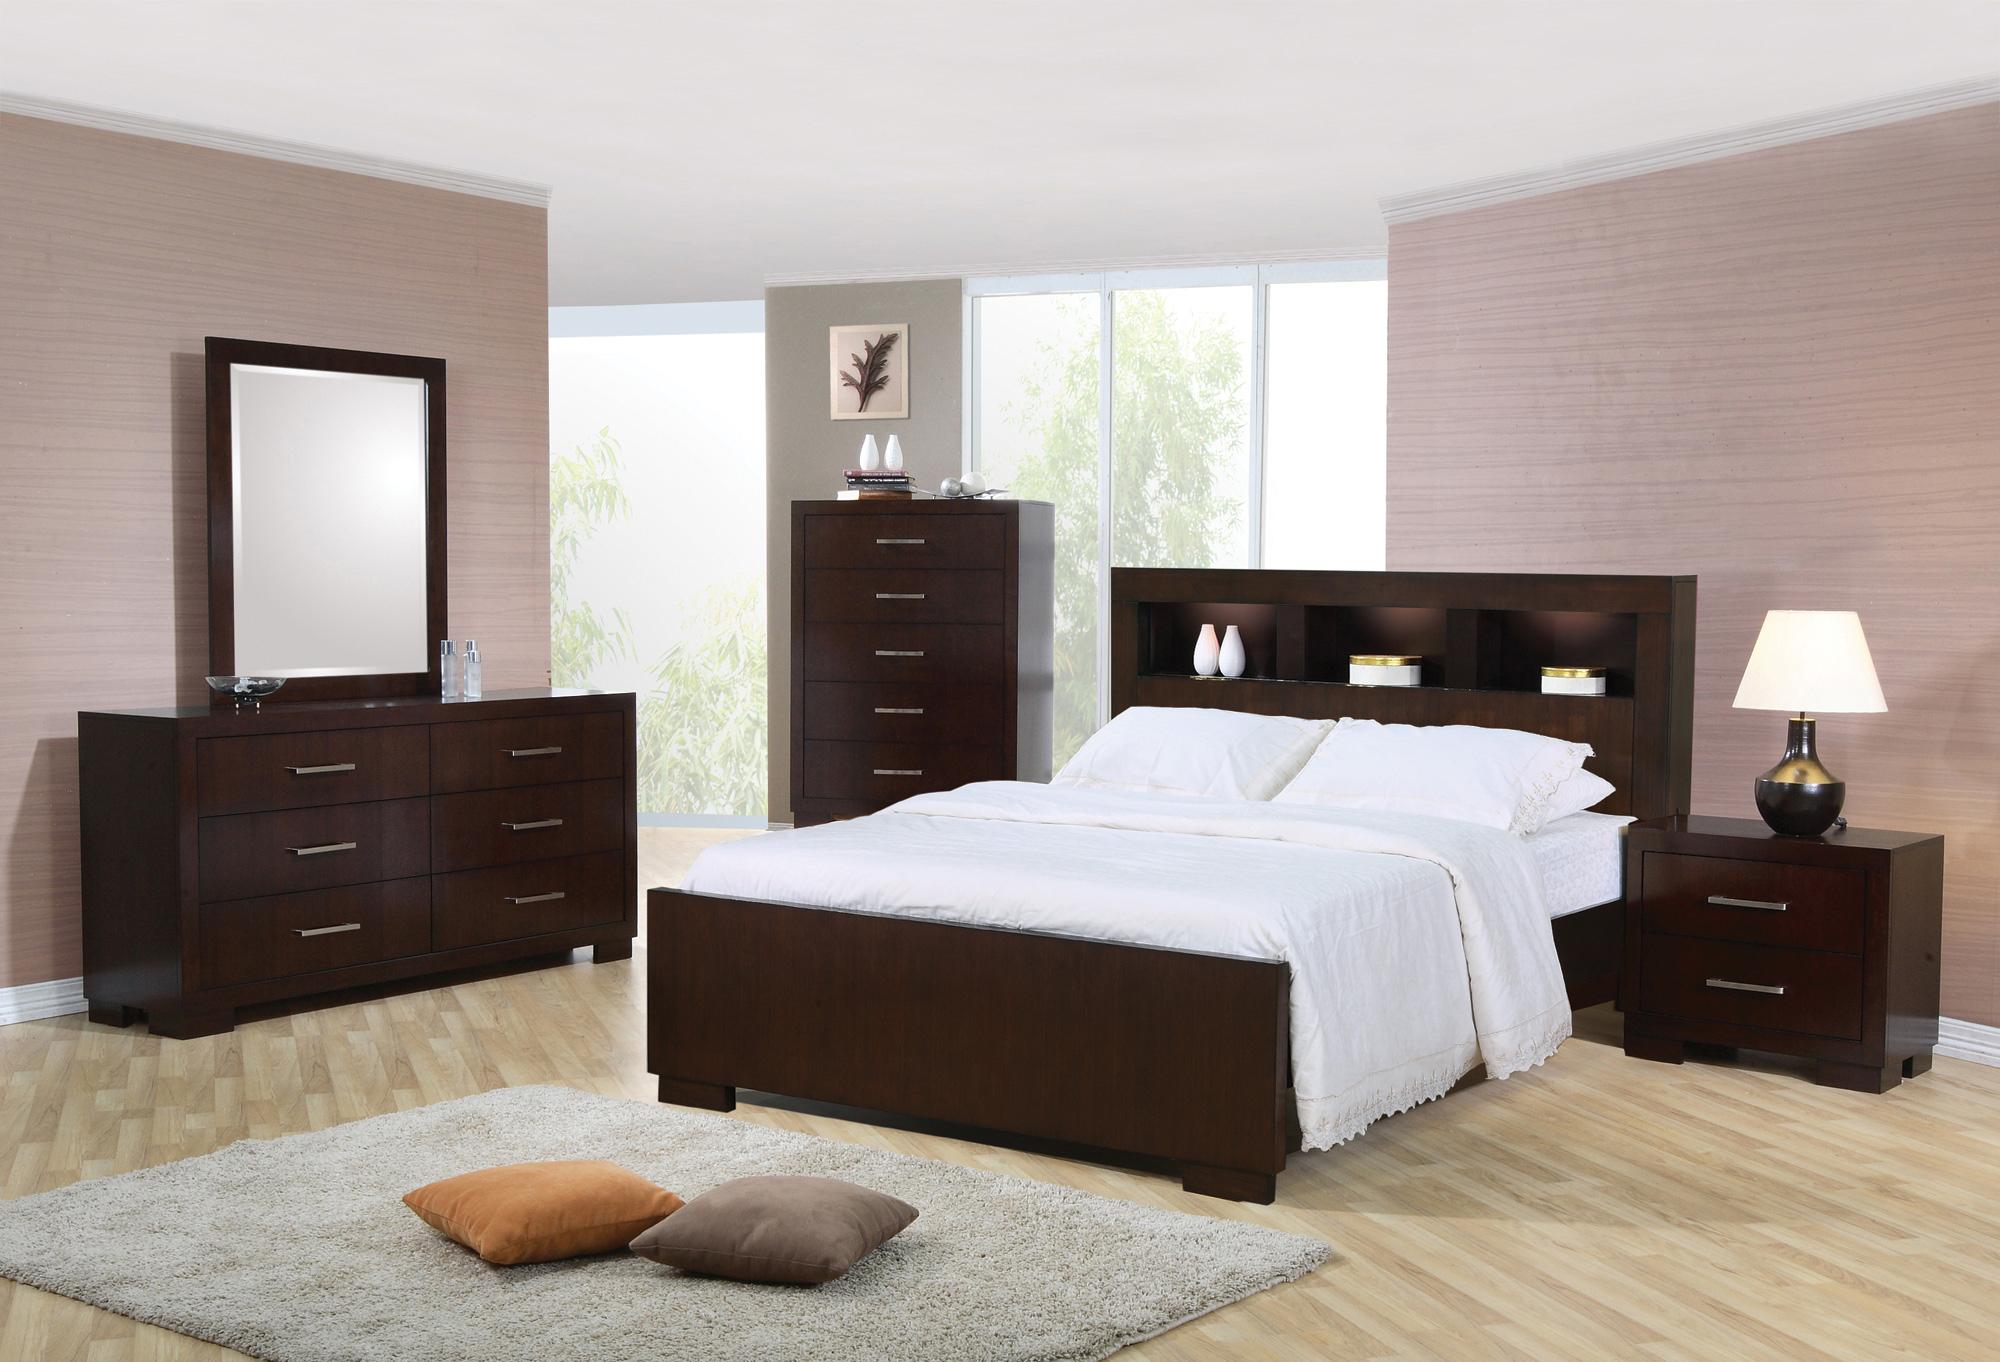 jordan's bedroom furniture